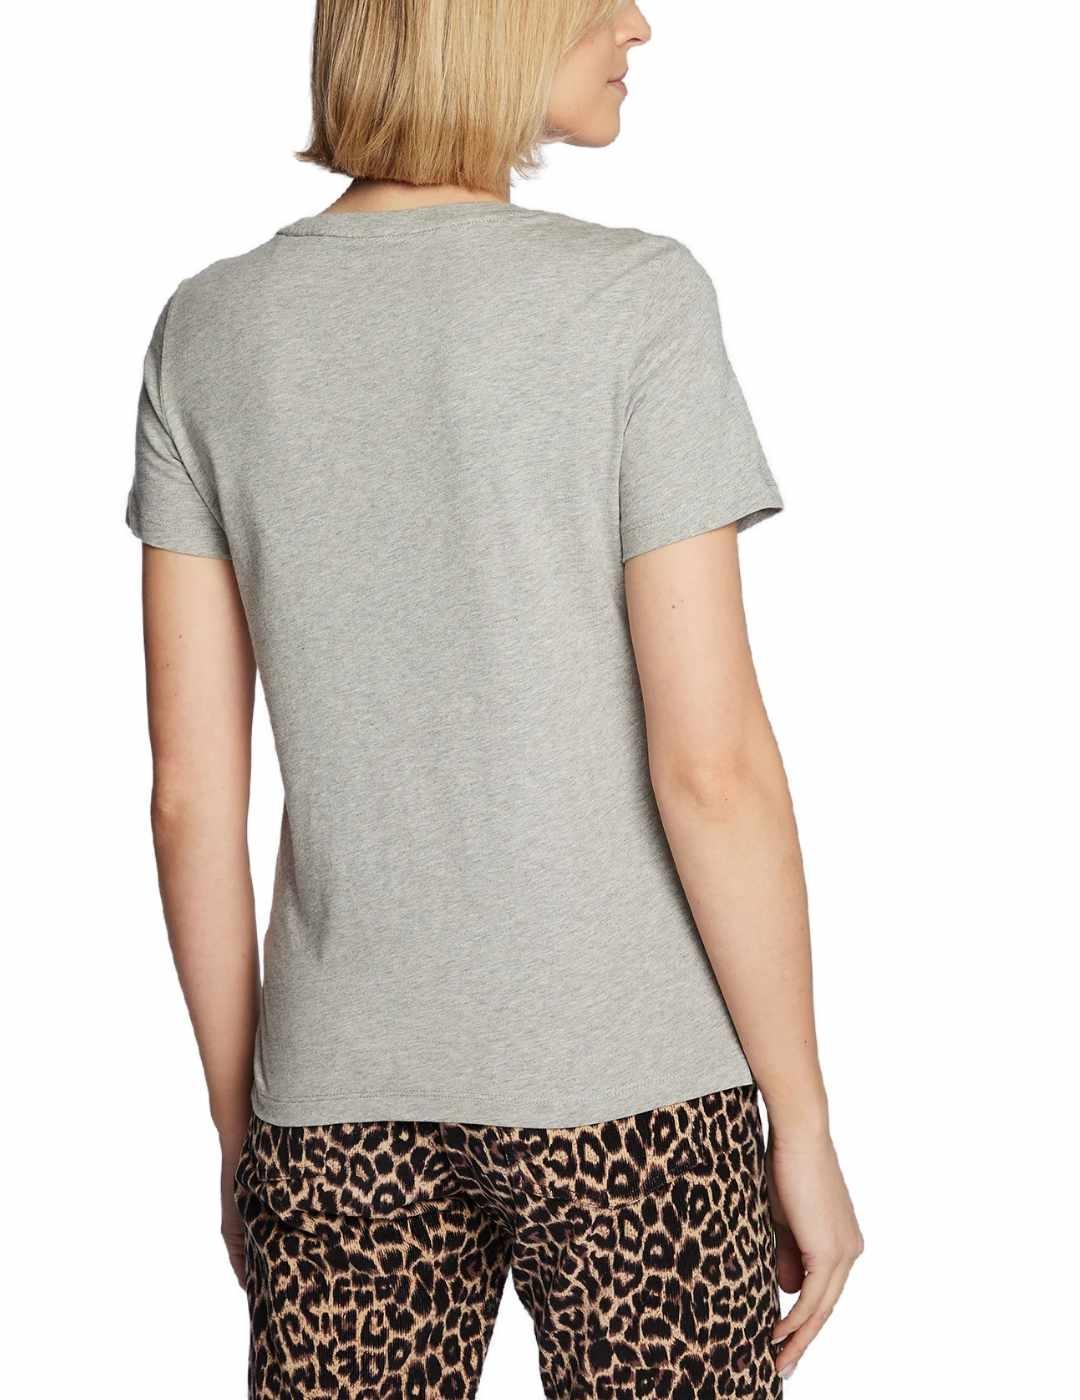 Camiseta Guess Angeline gris de manga corta para mujer